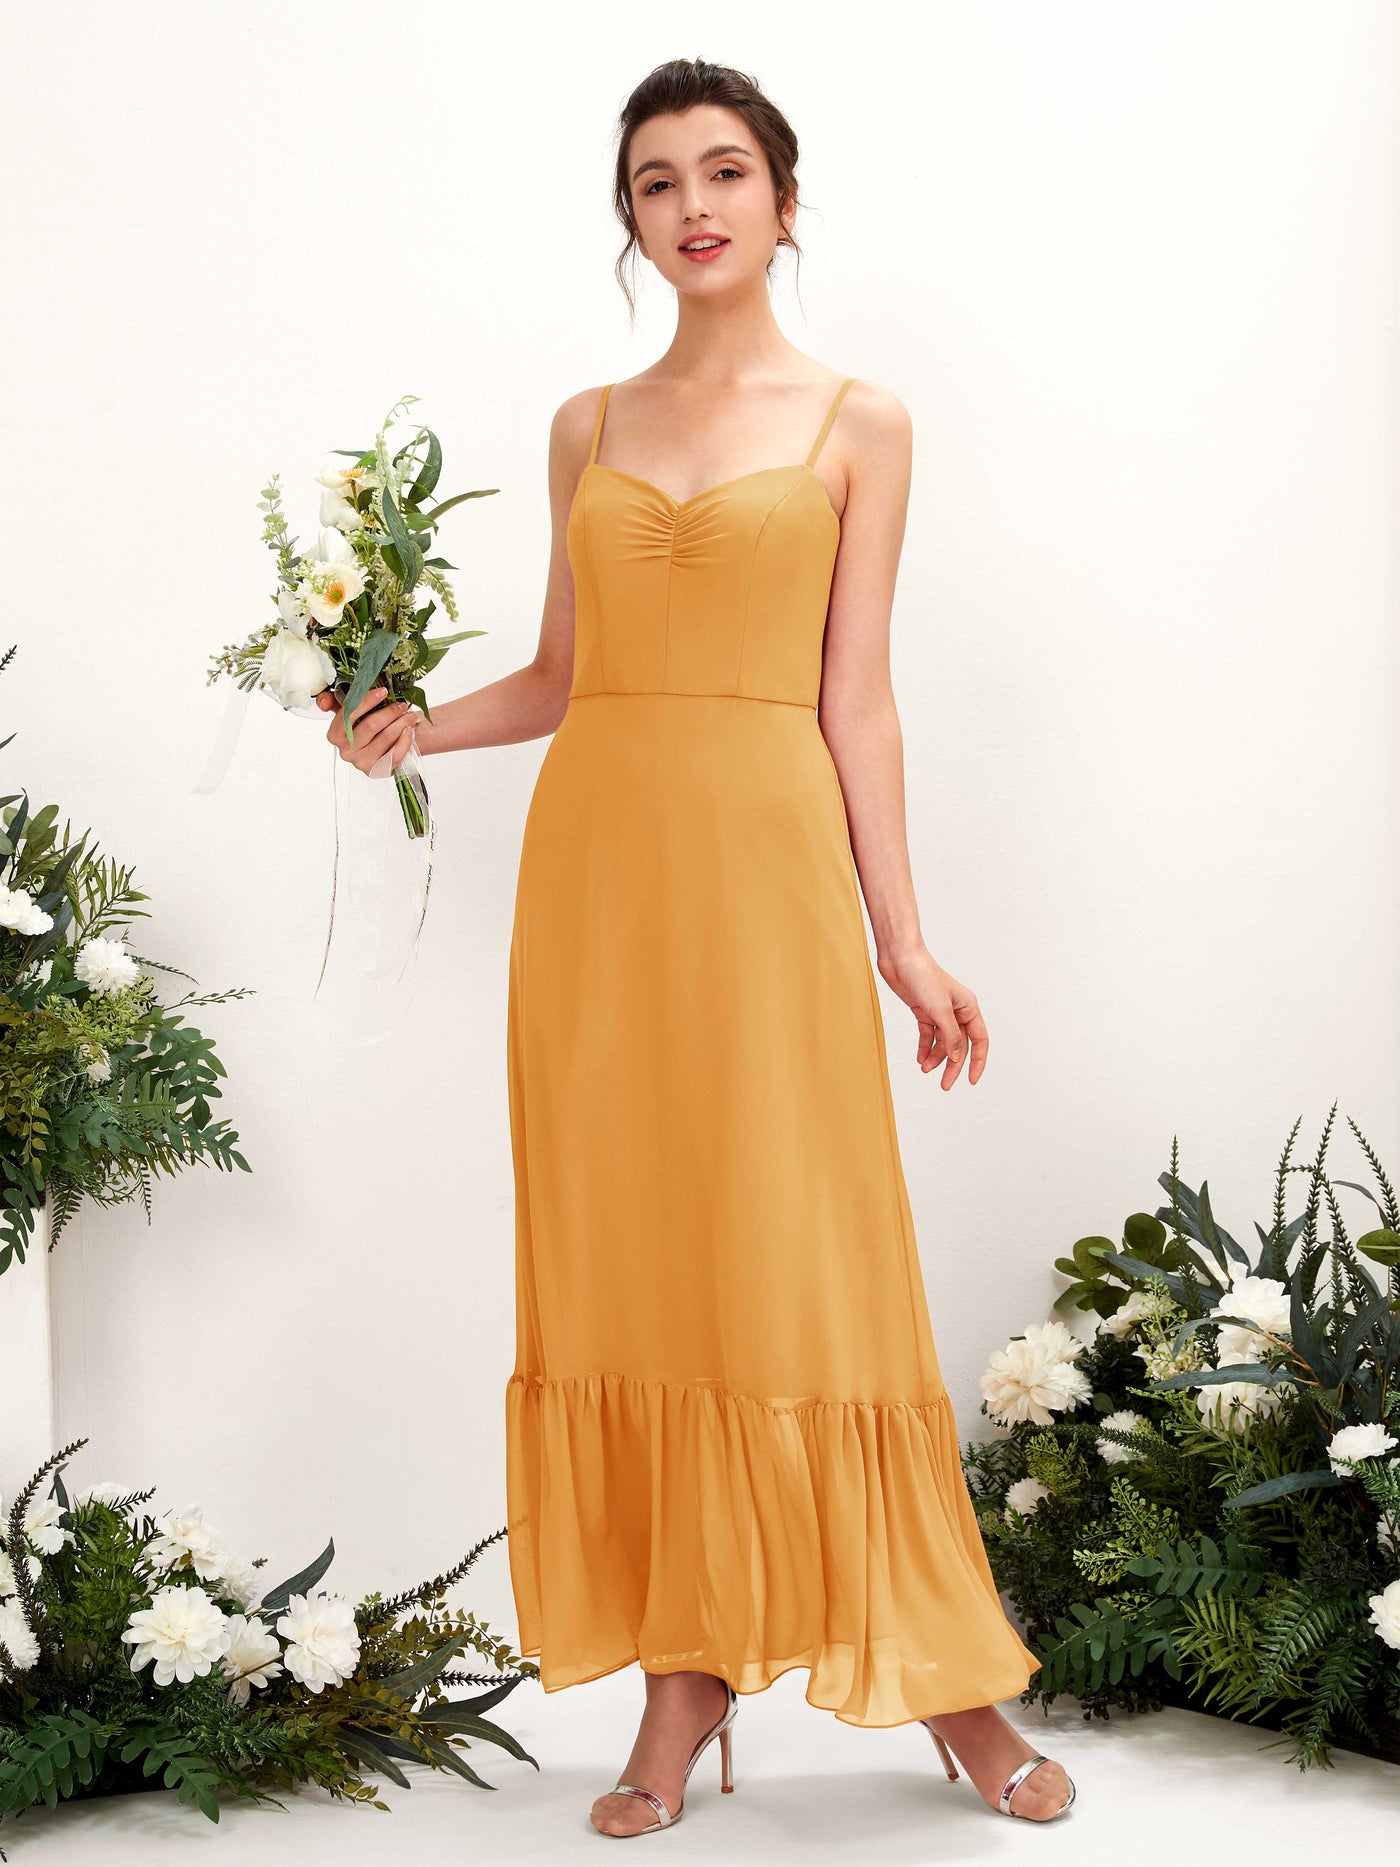 Spaghetti-straps Sweetheart Sleeveless Chiffon Bridesmaid Dress - Mango (81223002)#color_mango